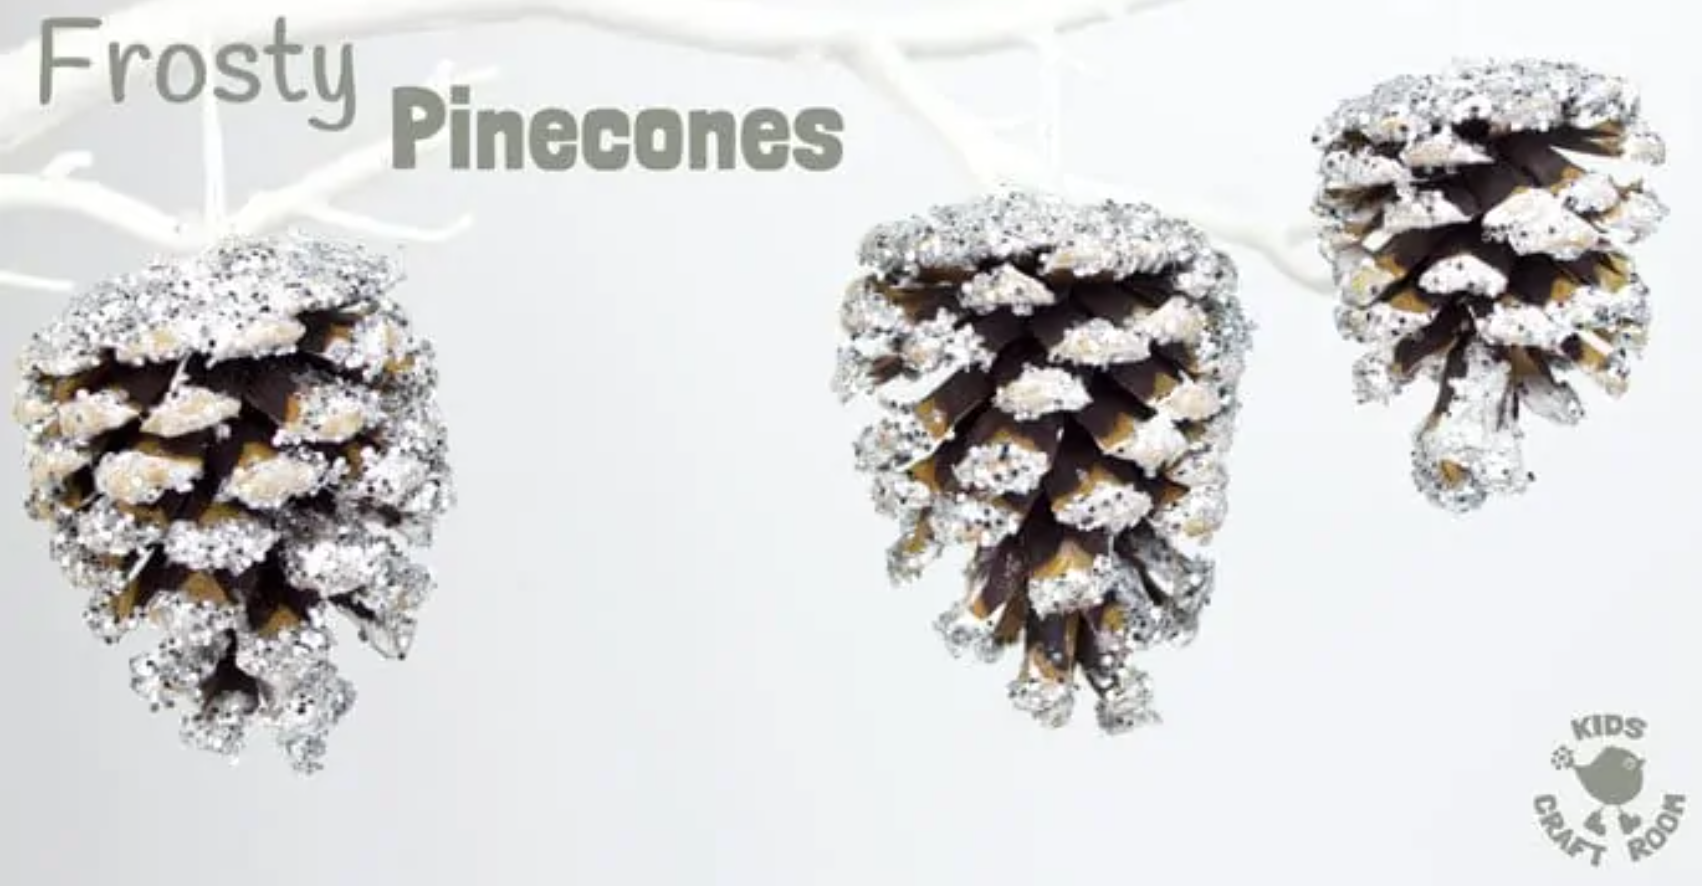 frosty pinecones